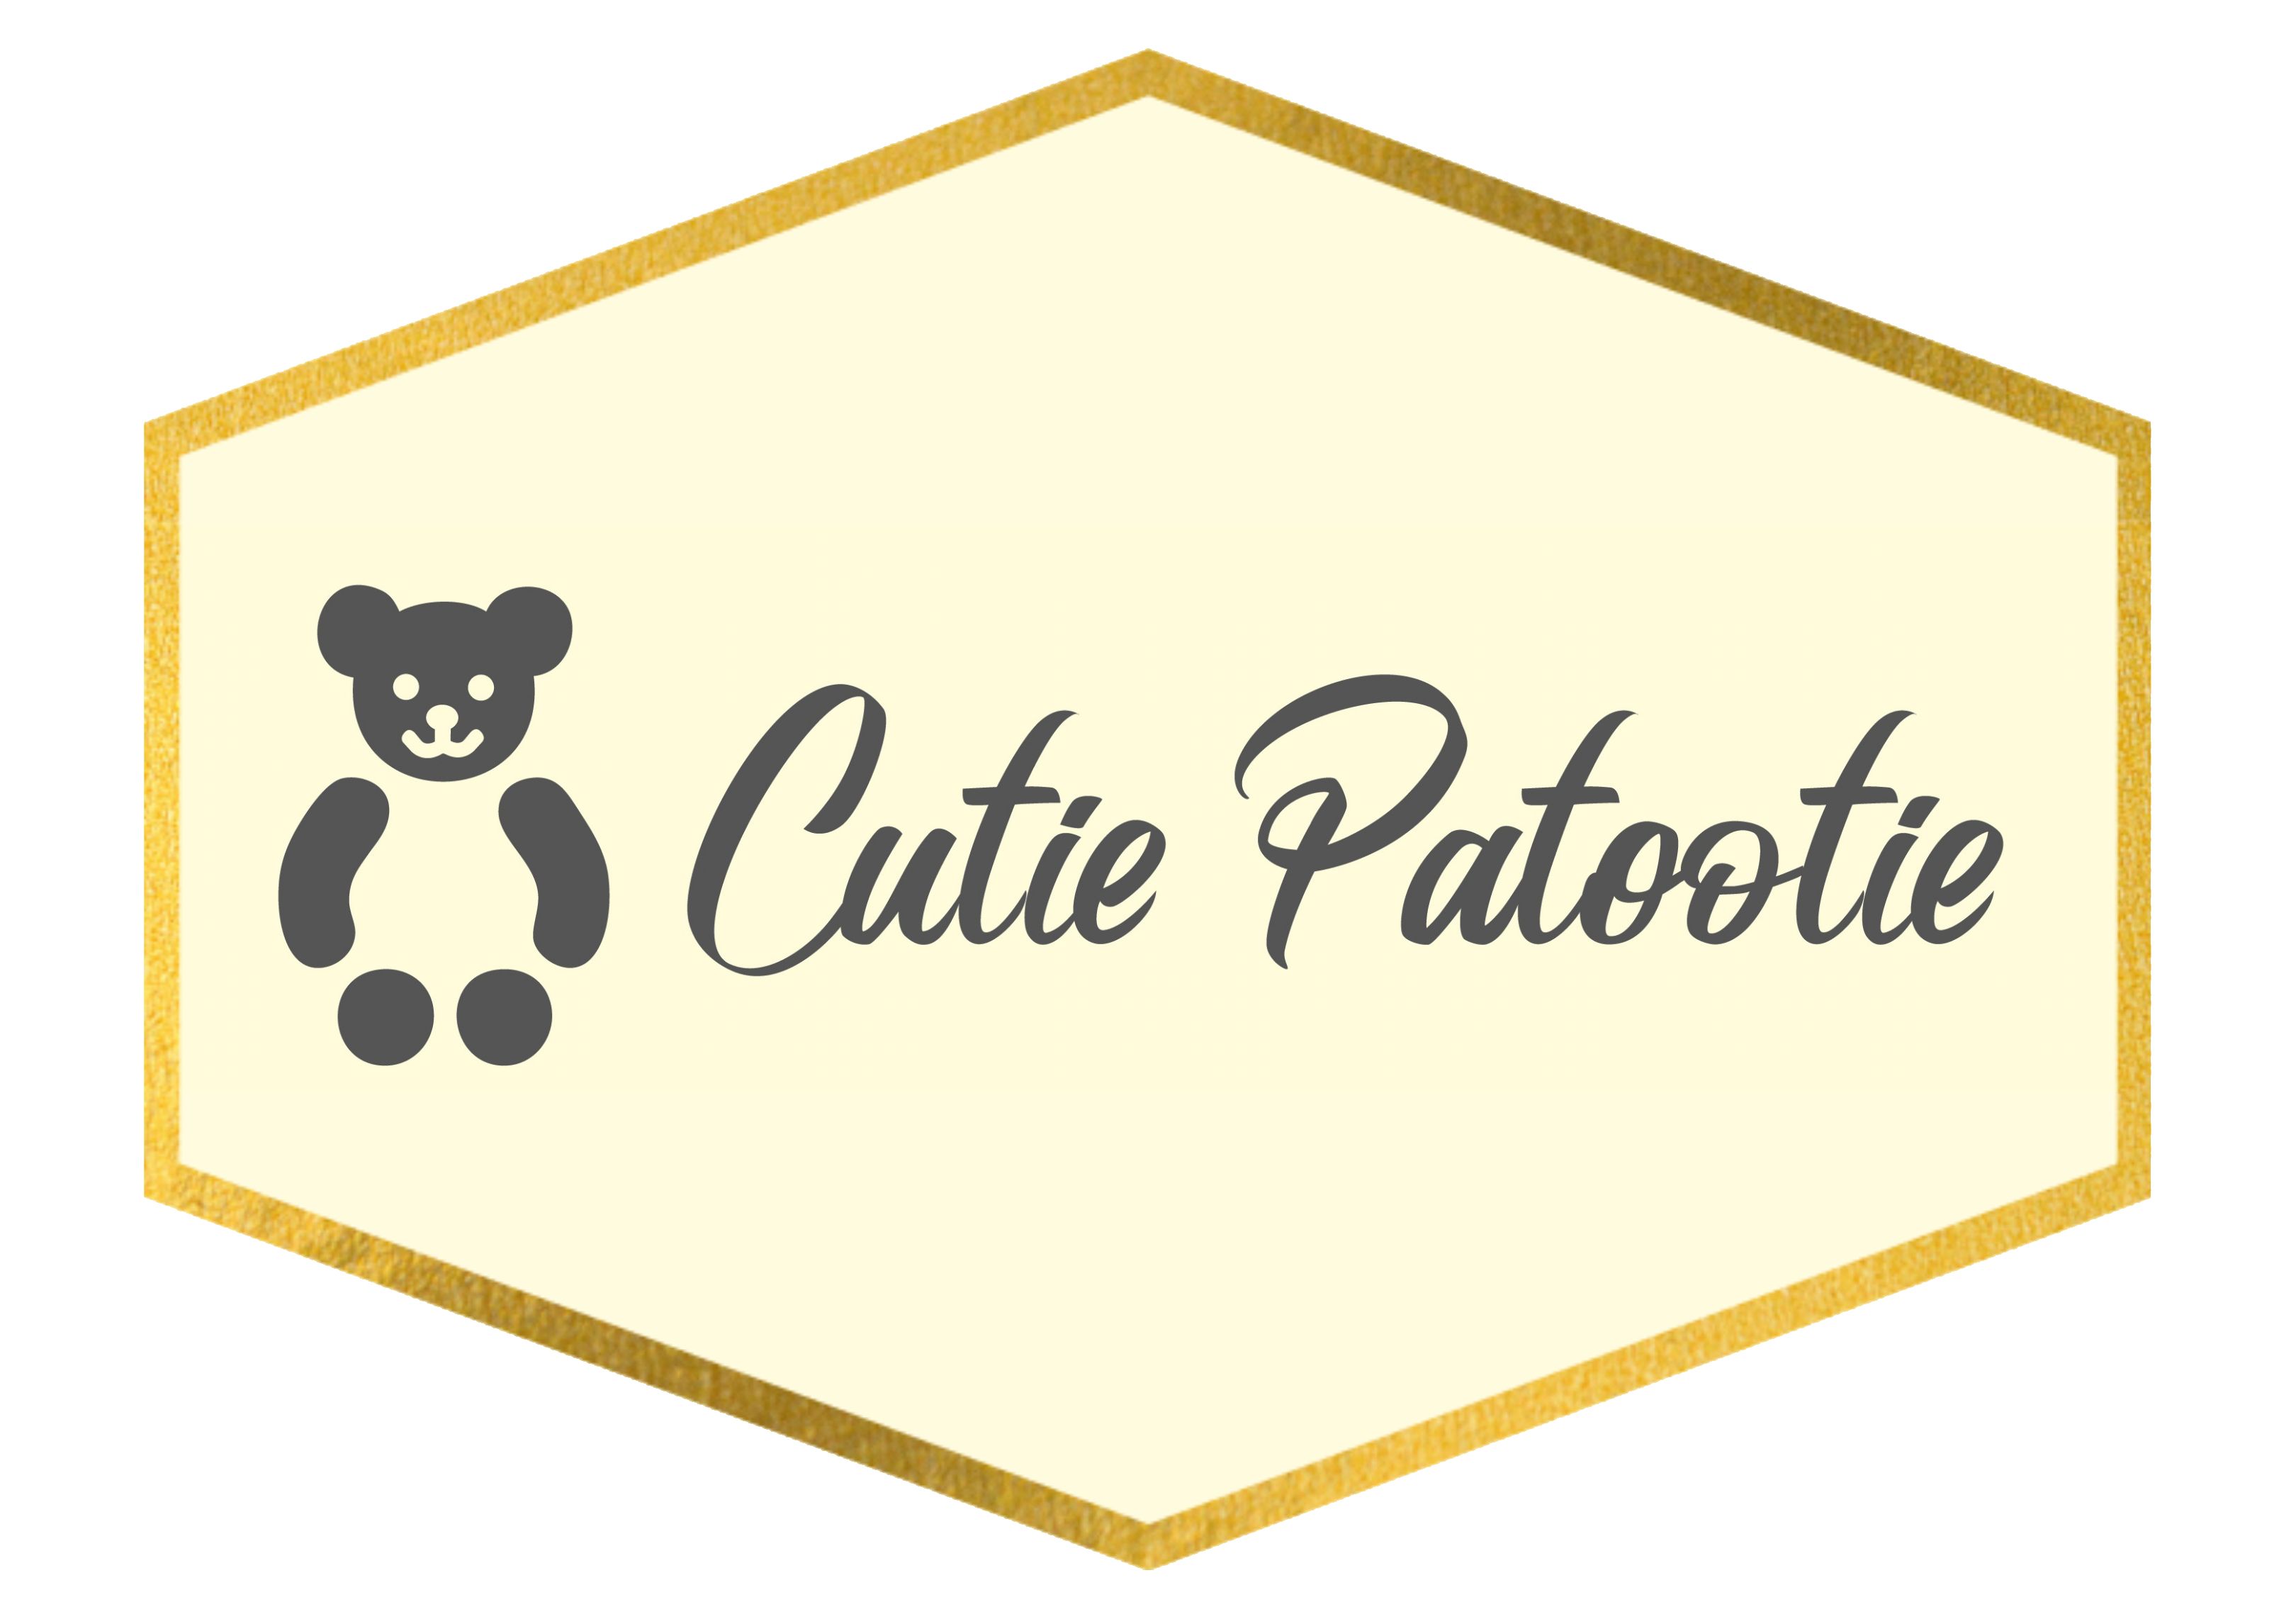 Cutie Patootie Coupon Codes